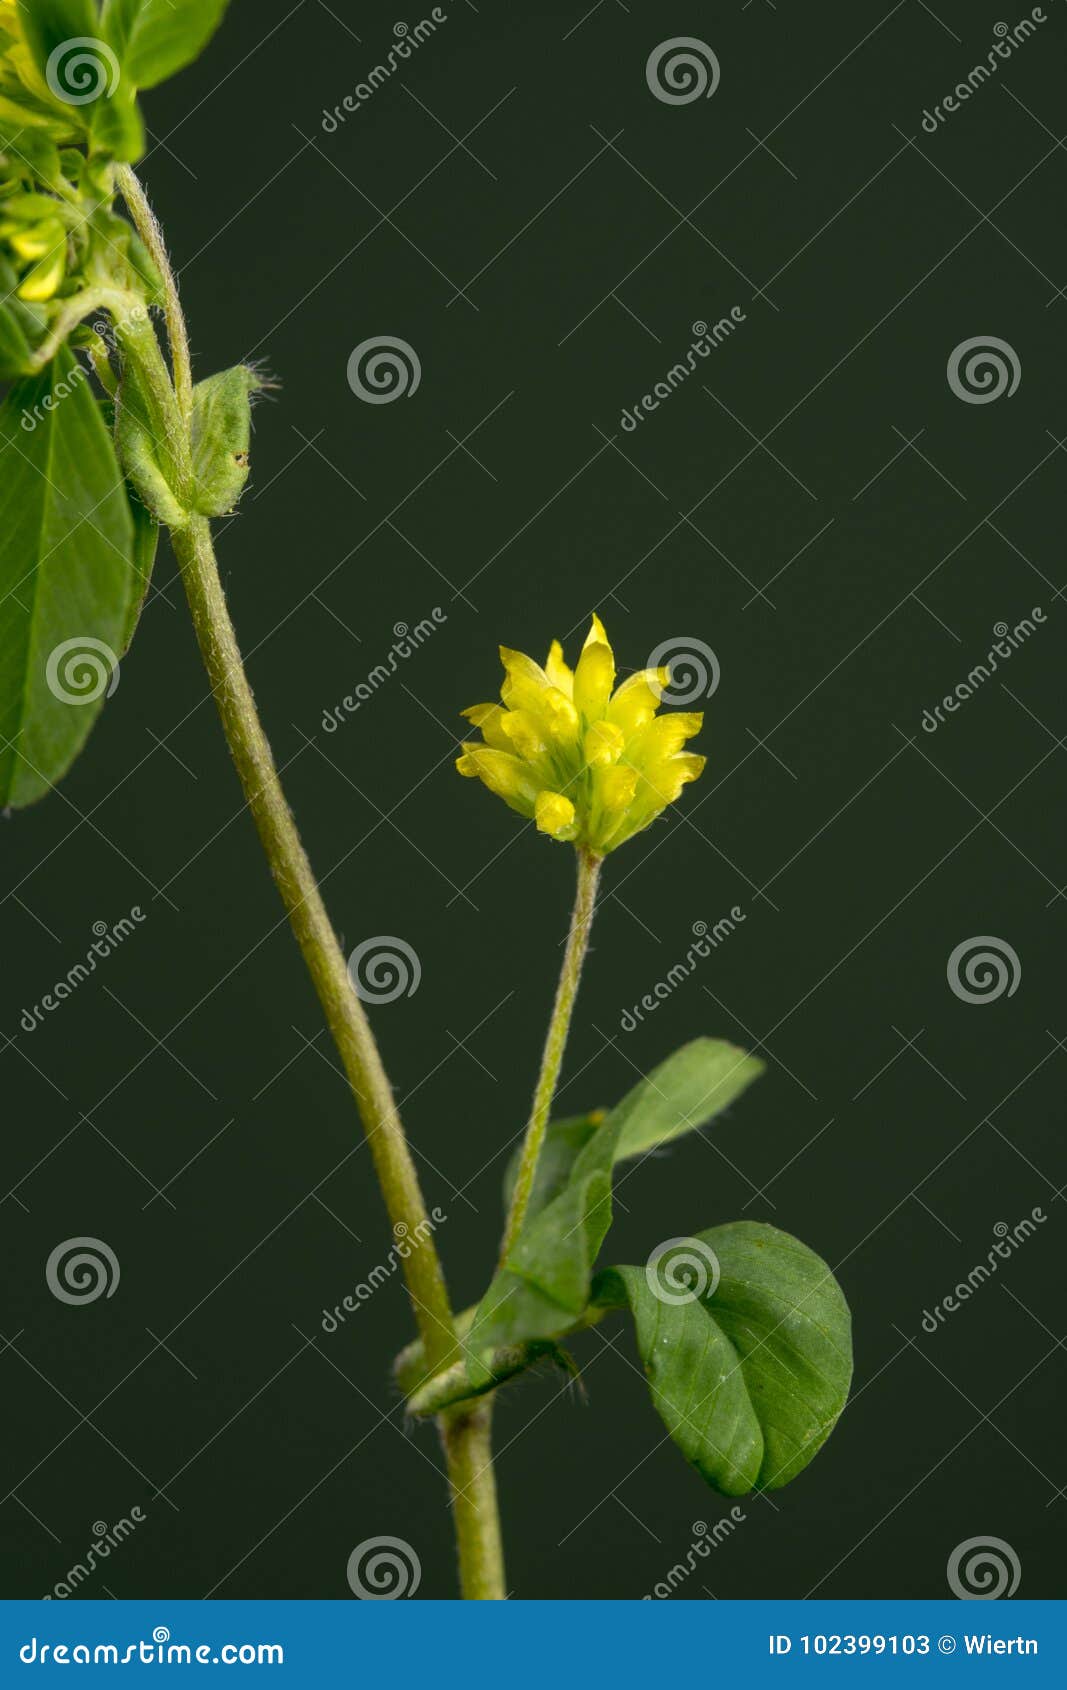 trifolium dubium is a small clover